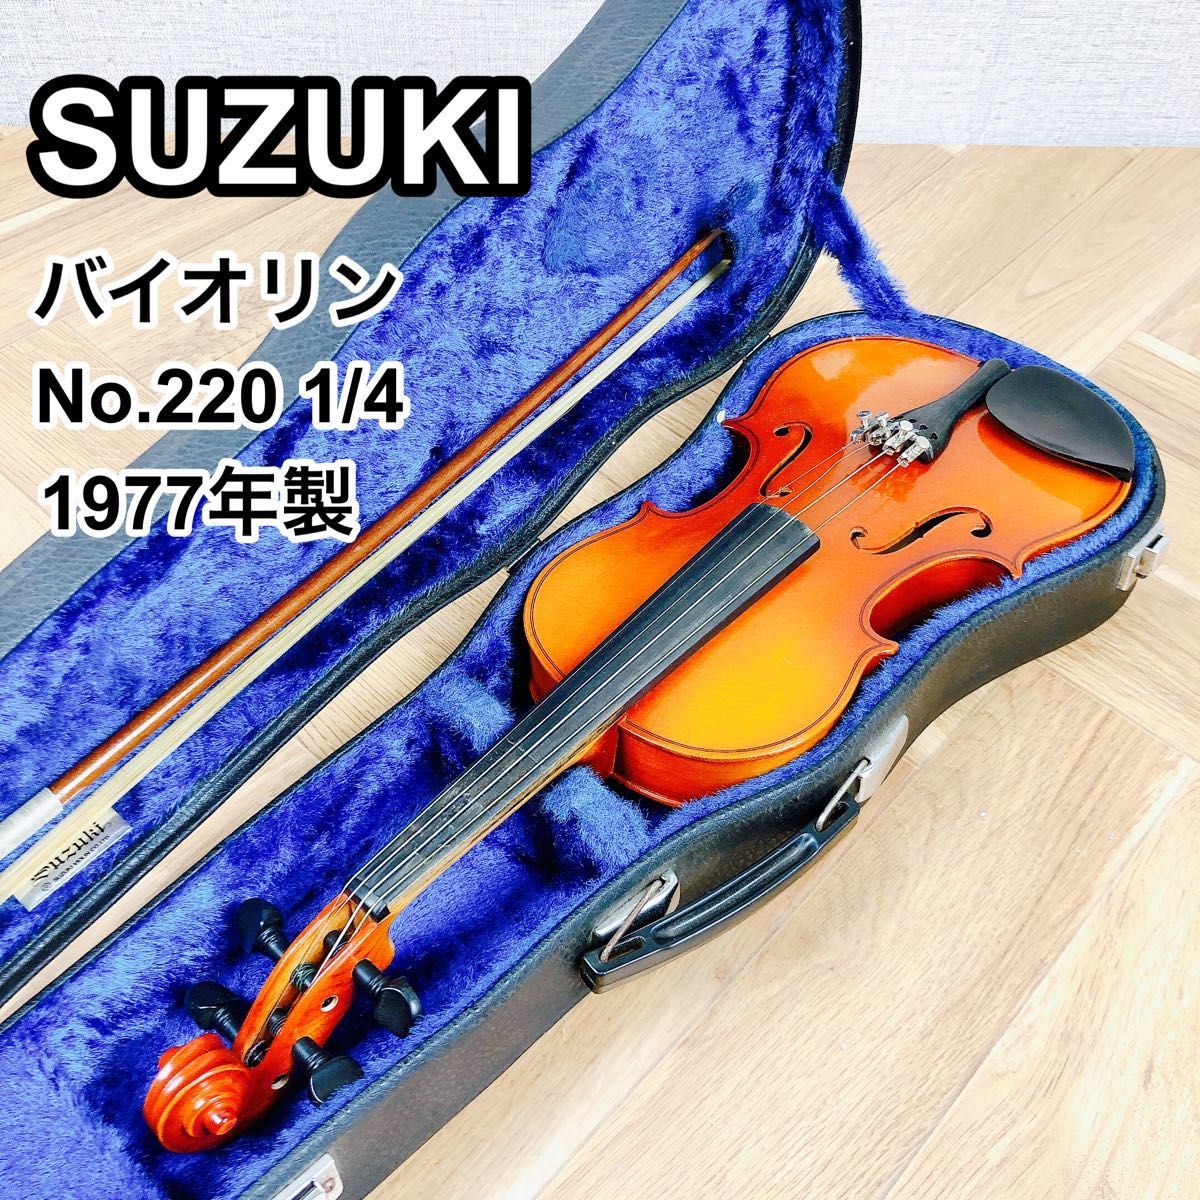 SUZUKI スズキ バイオリン No.220 1/4 1977年製